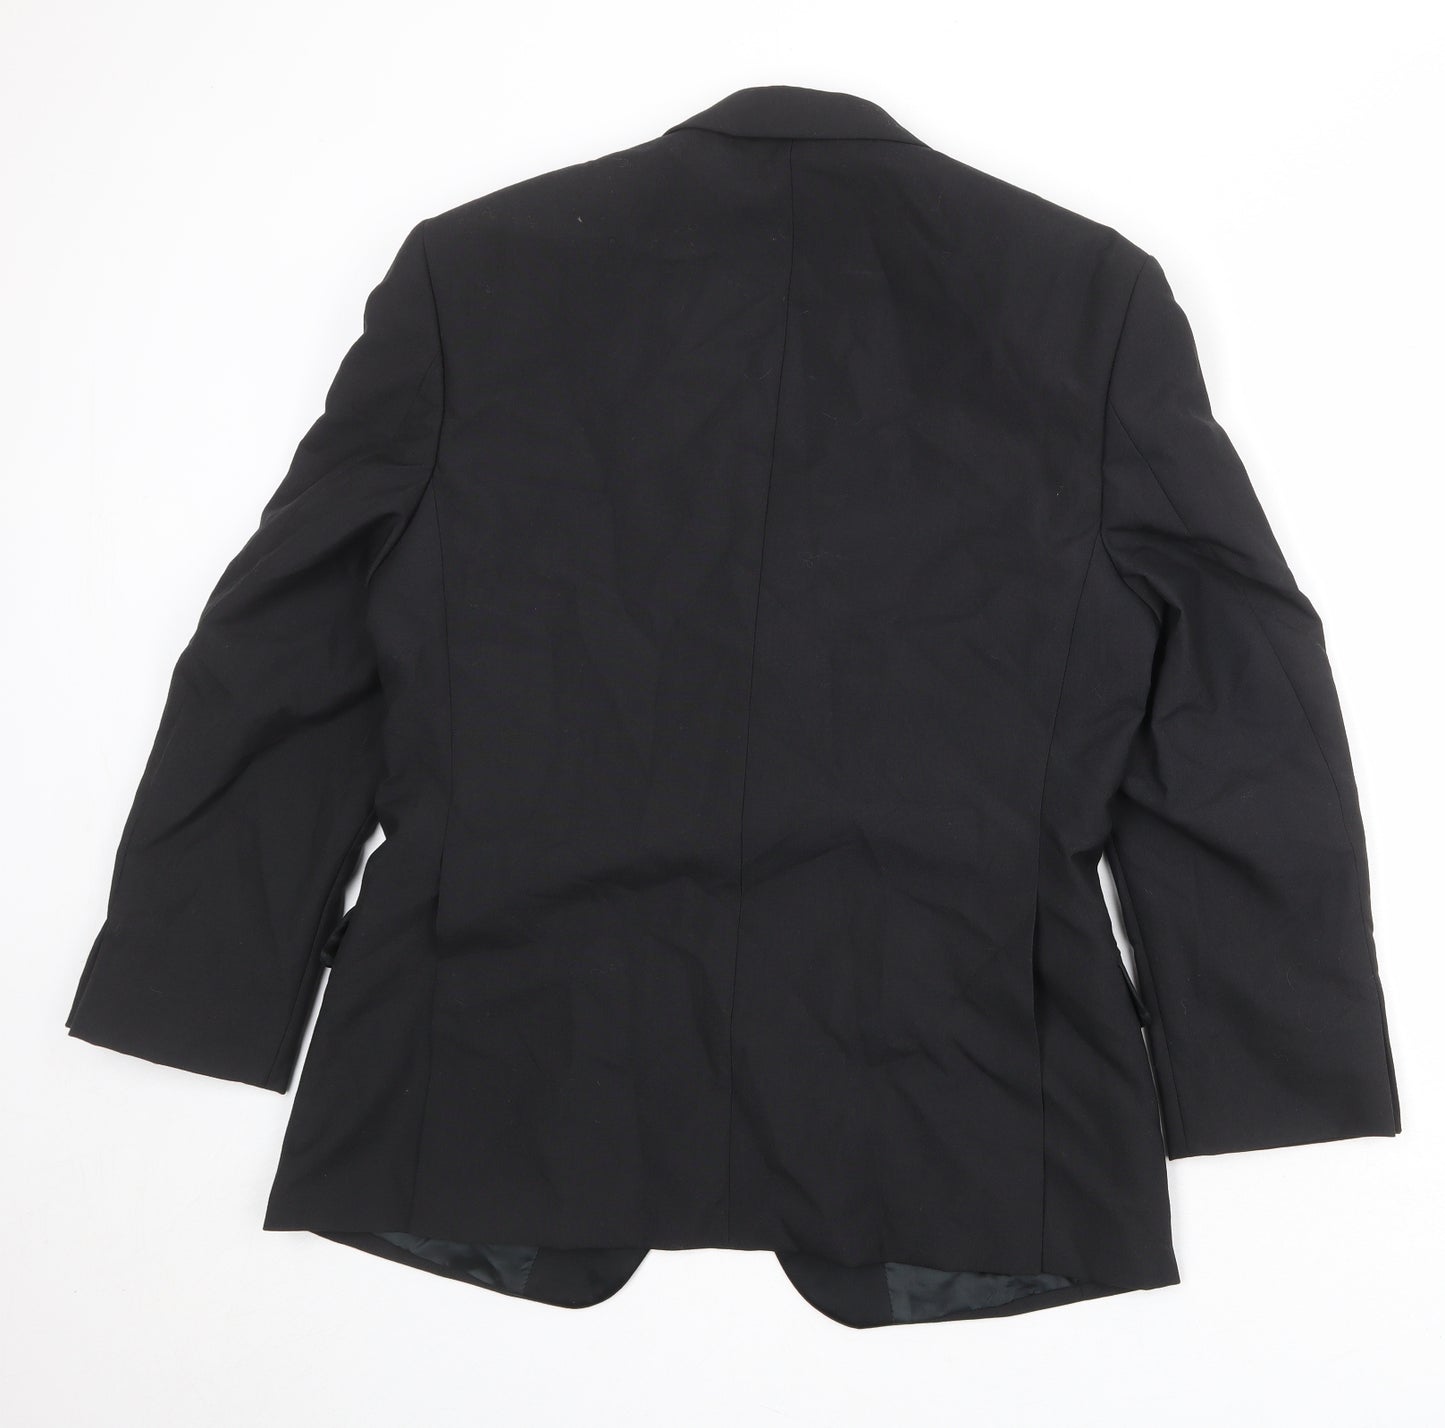 Exectutex Mens Black Polyester Jacket Suit Jacket Size 38 Regular